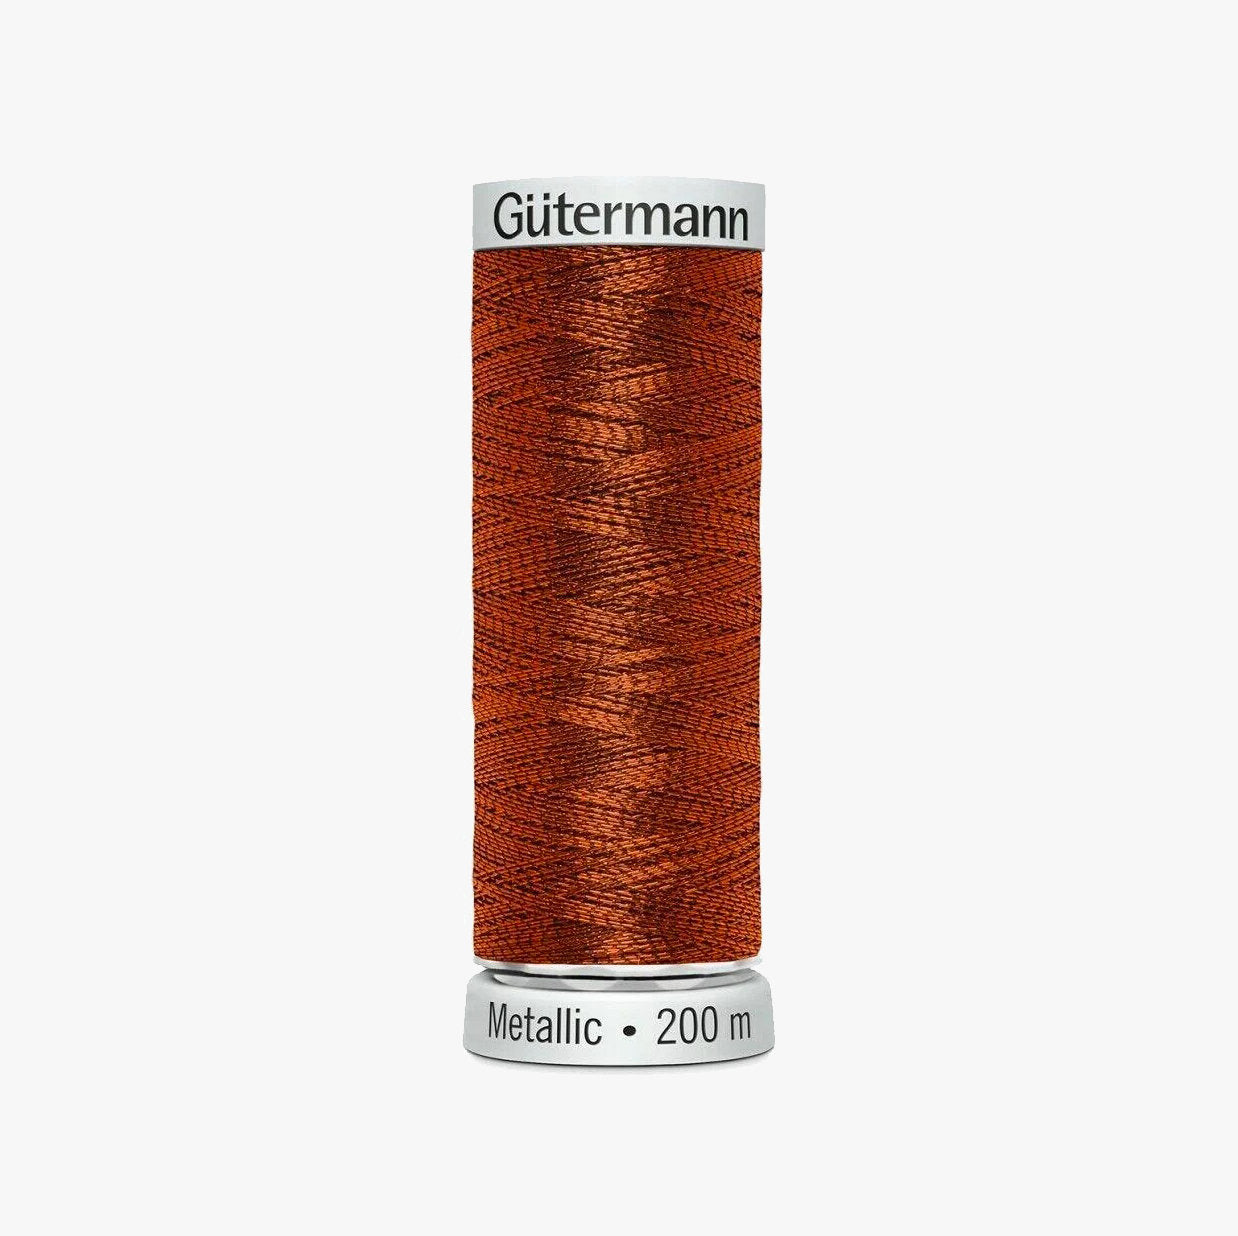 7010 Gutermann Metallic Thread 200m - Metallic Effect for Decorative Seams and Machine Embroidery